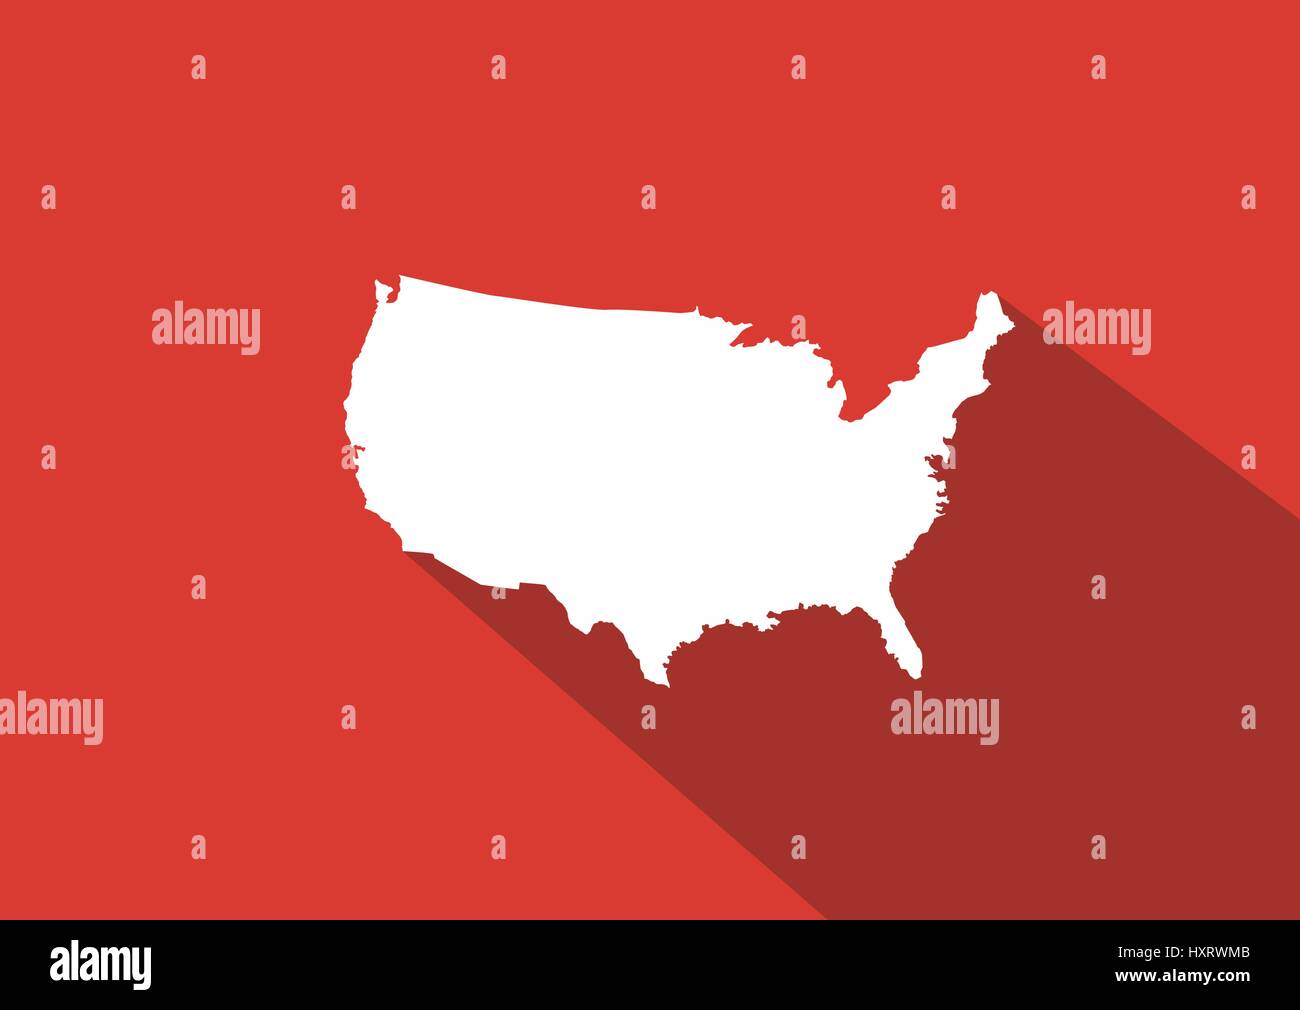 USA map vector illustration Stock Vector